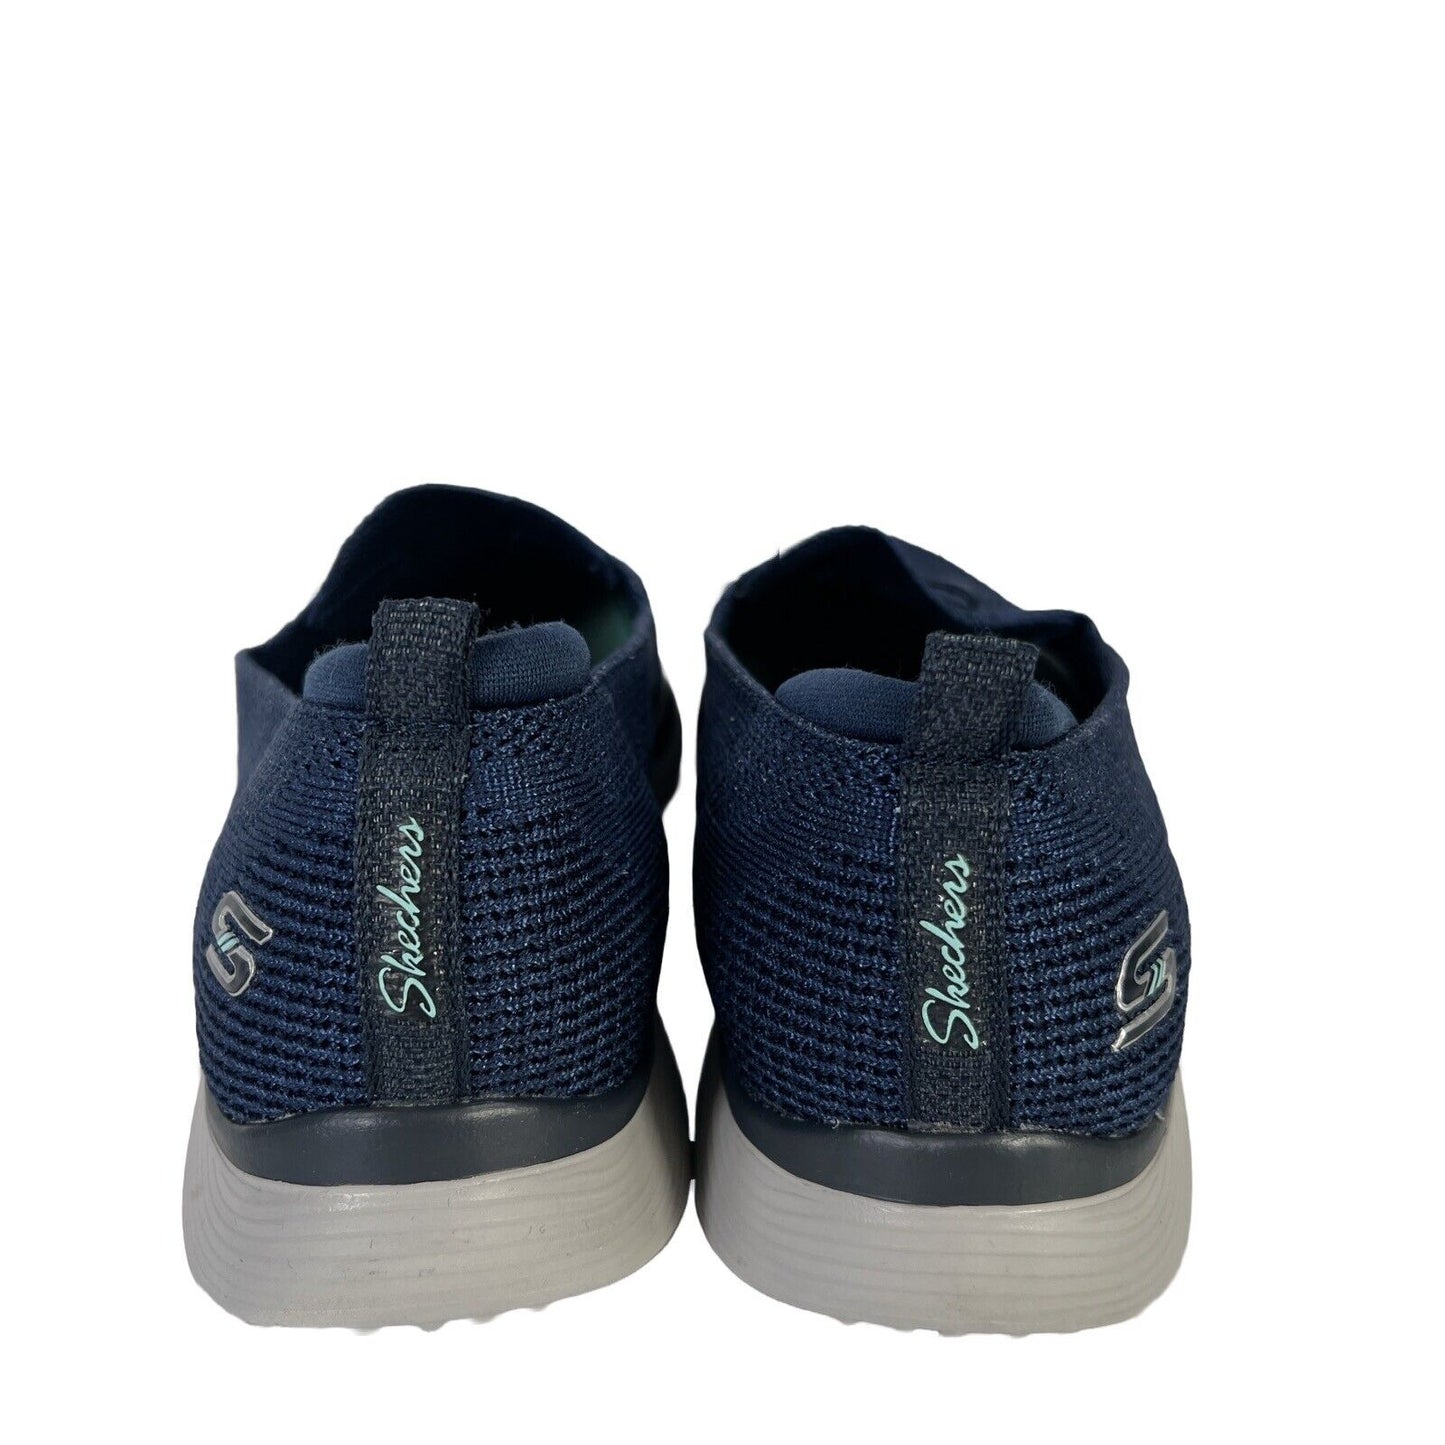 Skechers Women's Blue Microburst 2.0 Slip On Walking Shoes - 8.5